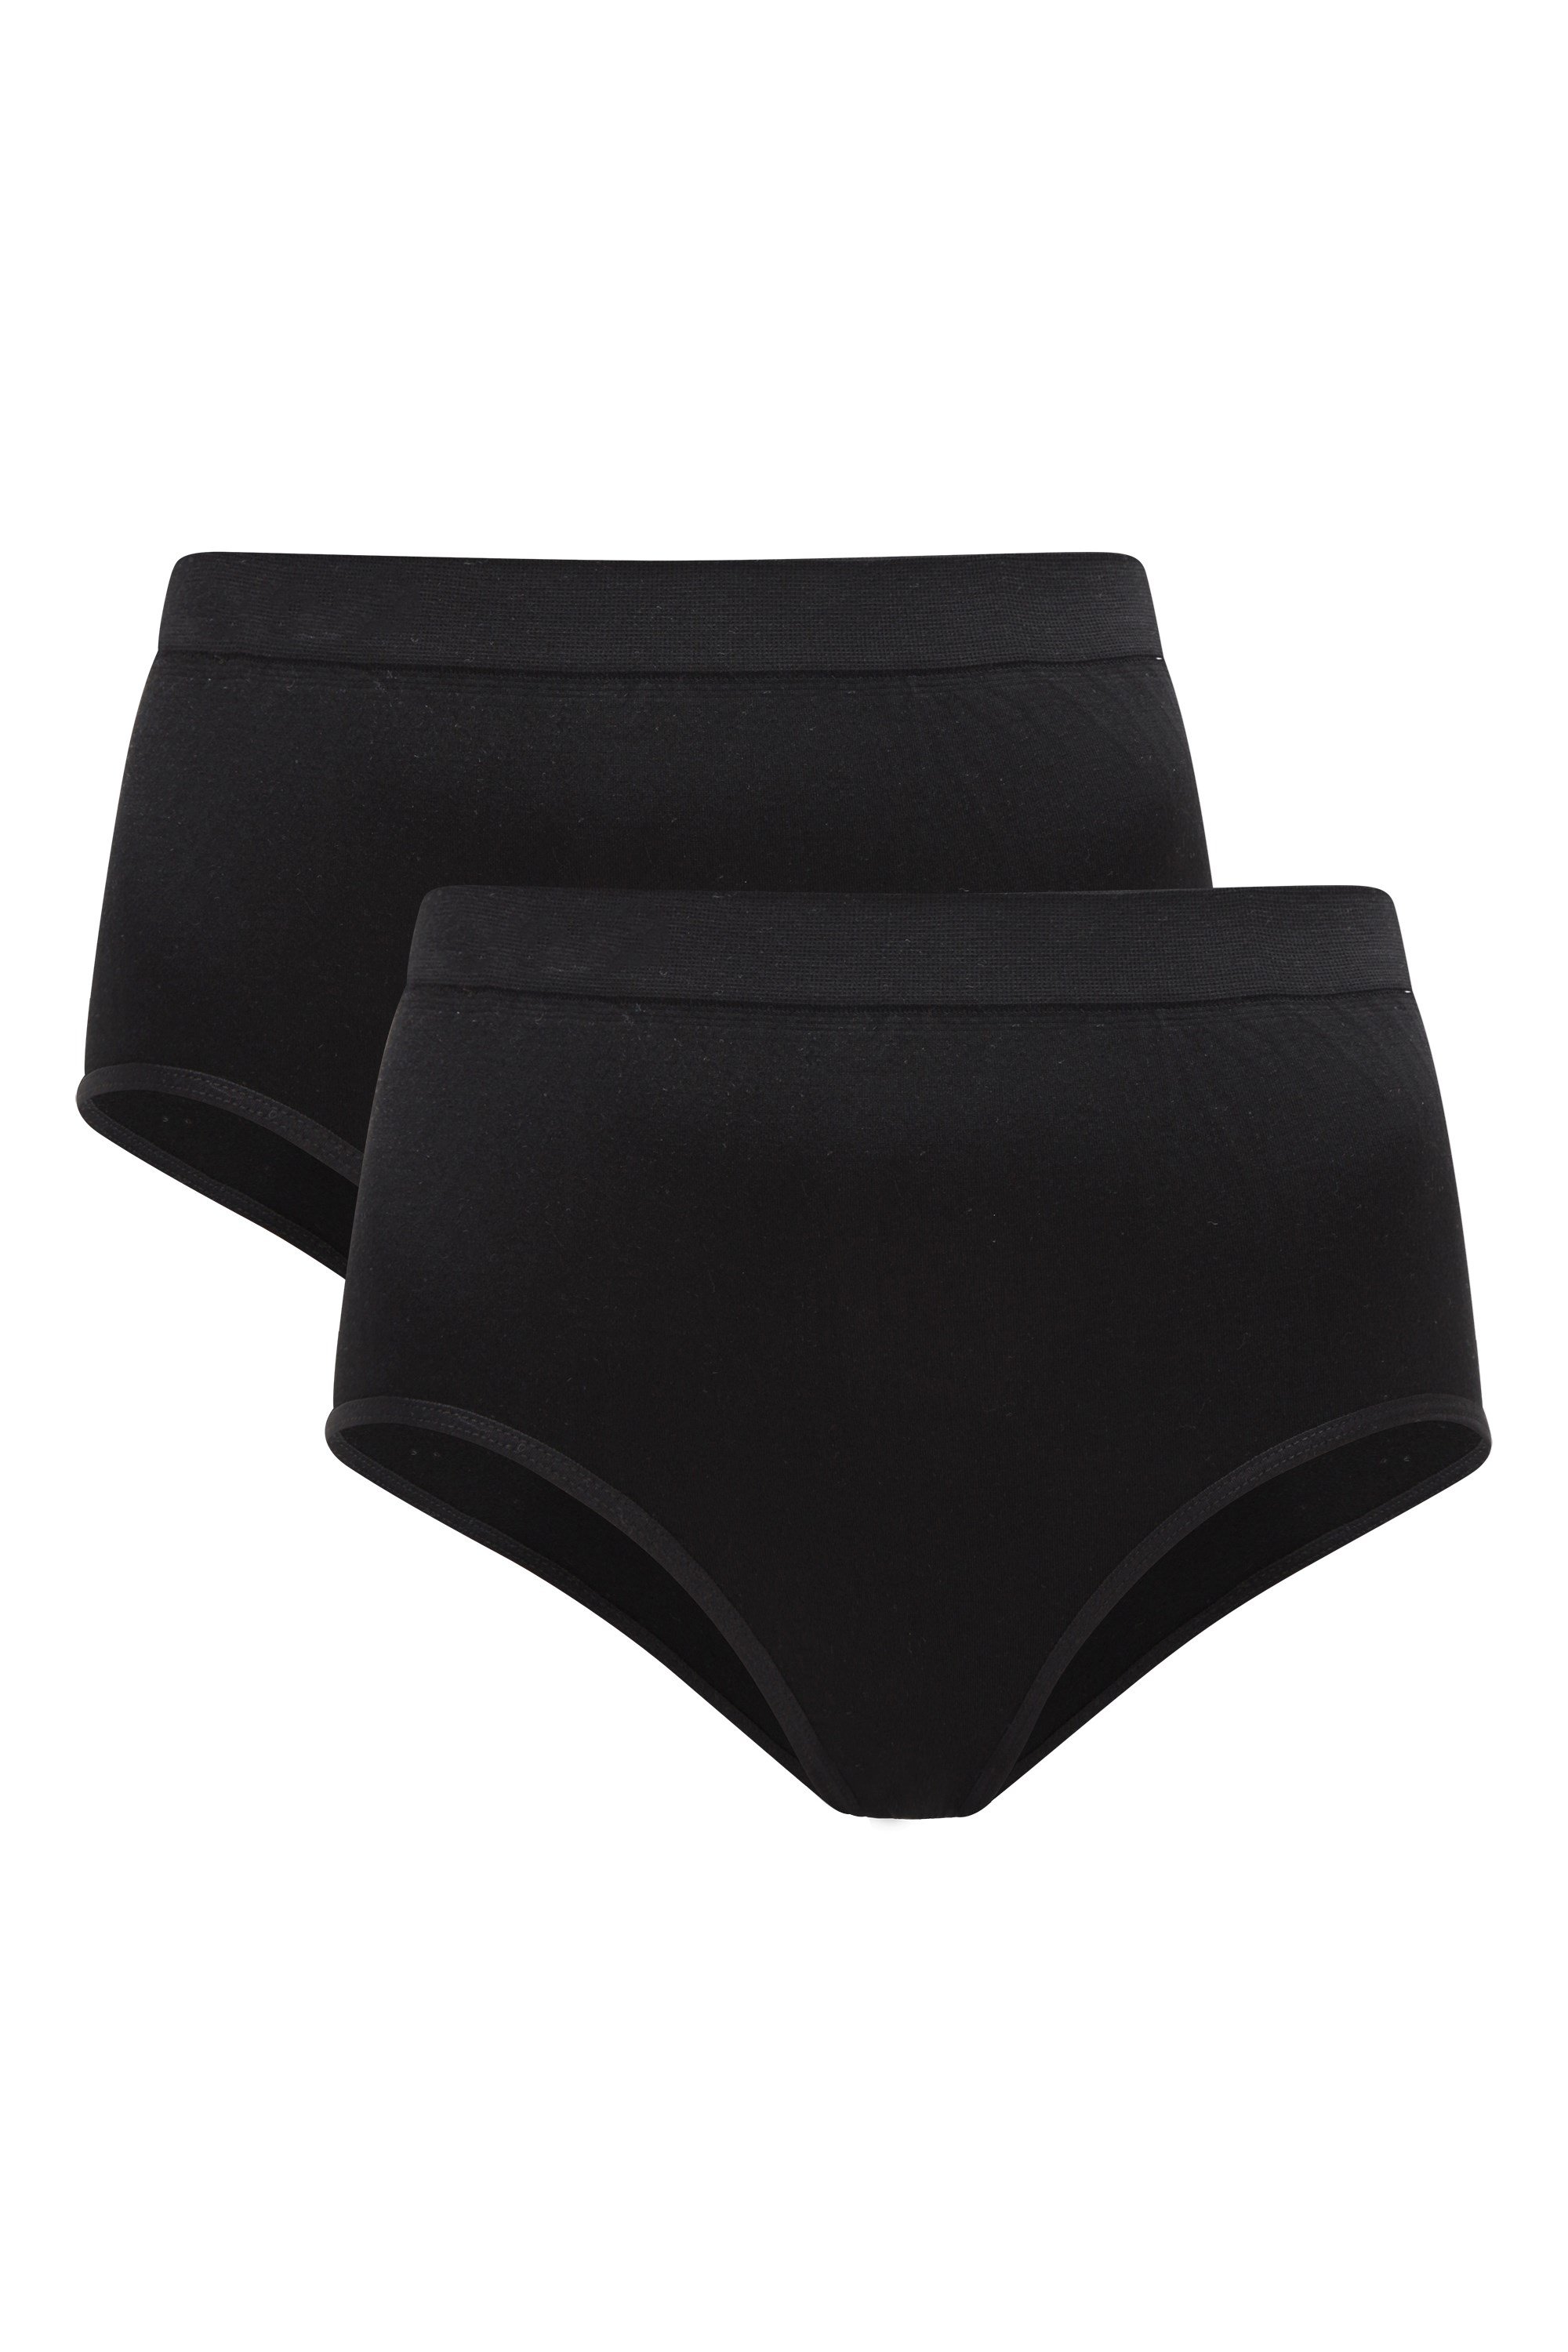 Womens Seamless High Waisted Pants 2-pack - Black